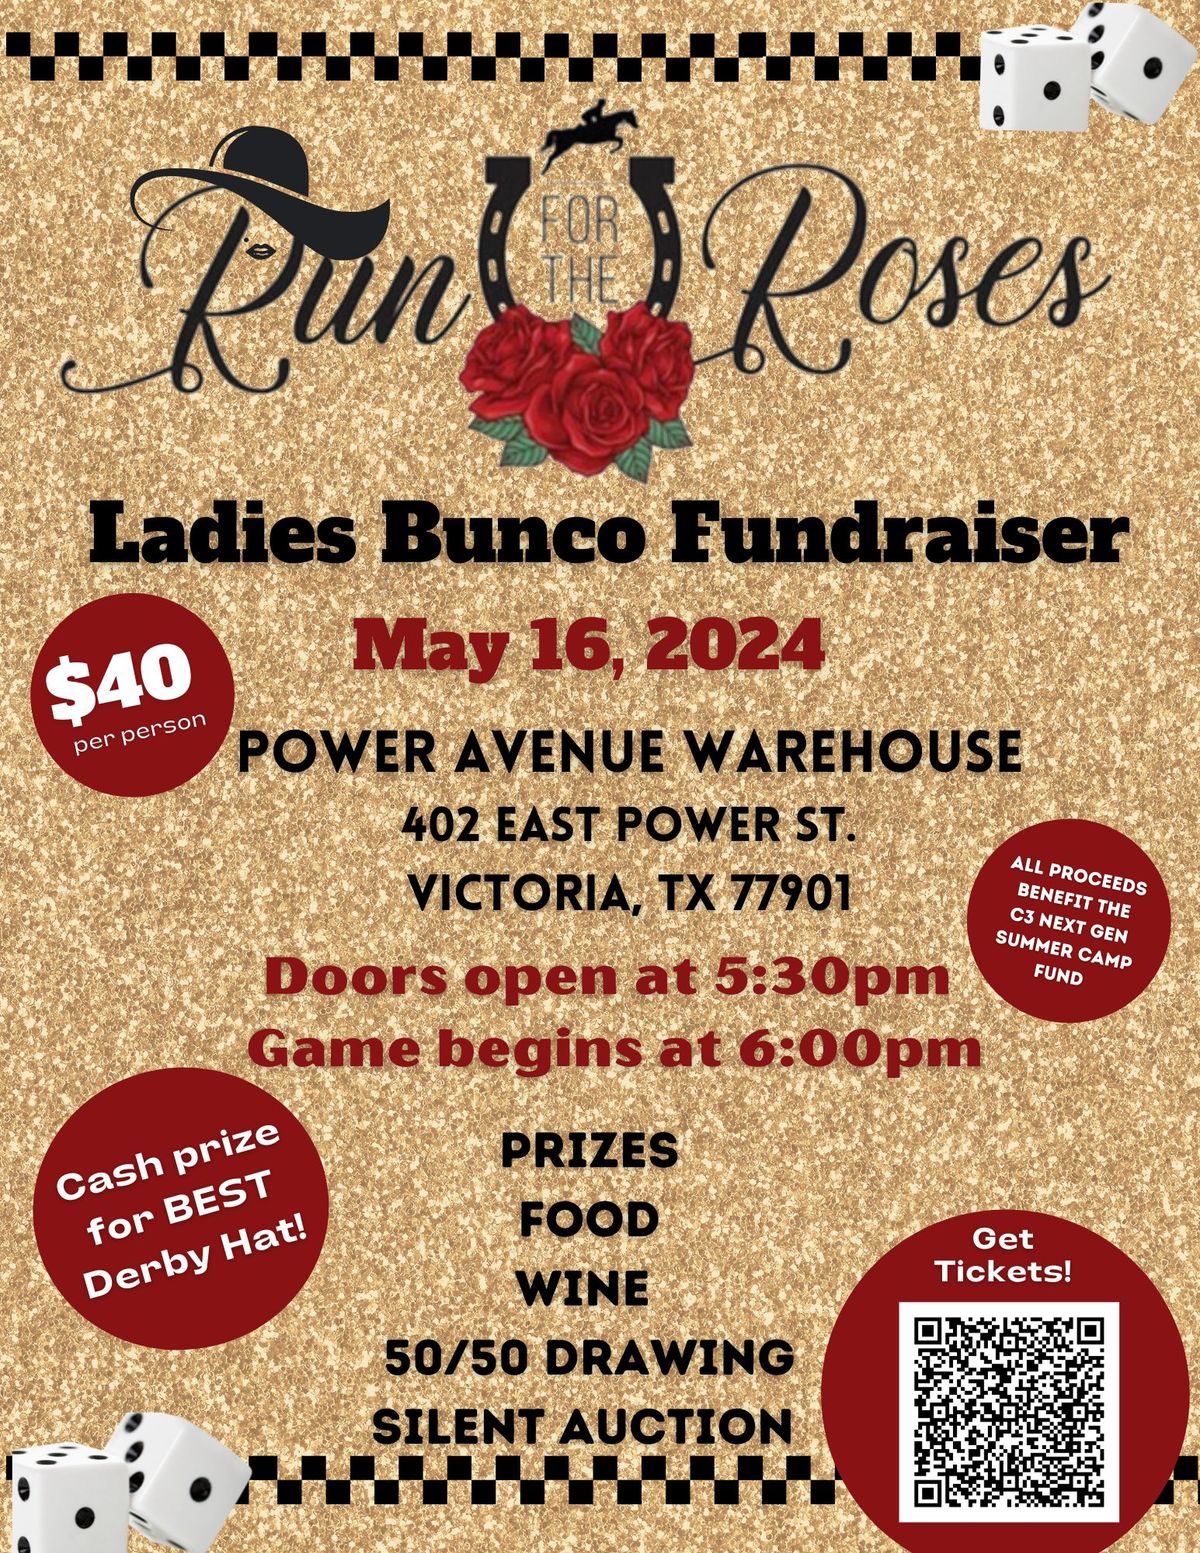 Run for the Roses BUNCO fundraiser! 